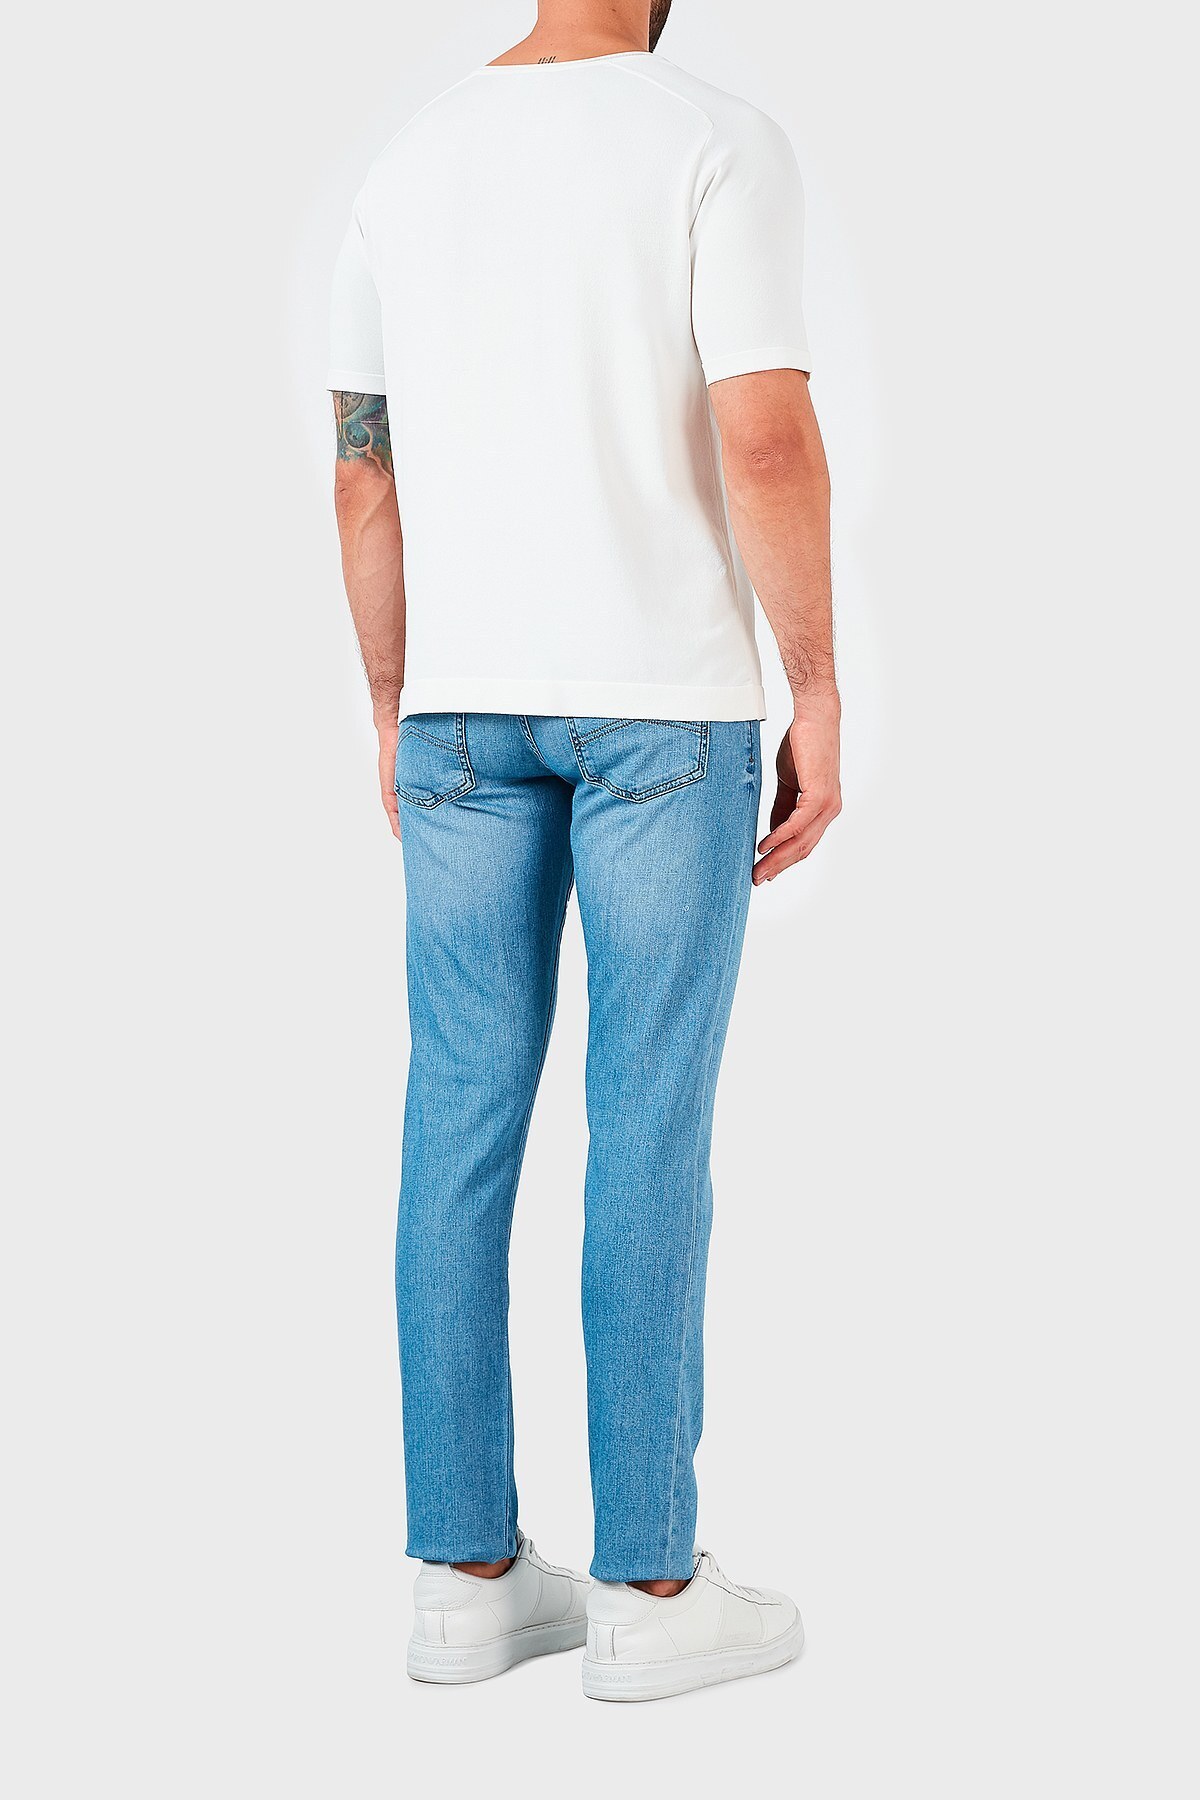 Armani Exchange Pamuklu Skinny J14 Jeans Erkek Kot Pantolon 3KZJ14 Z1L5Z 1500 MAVİ